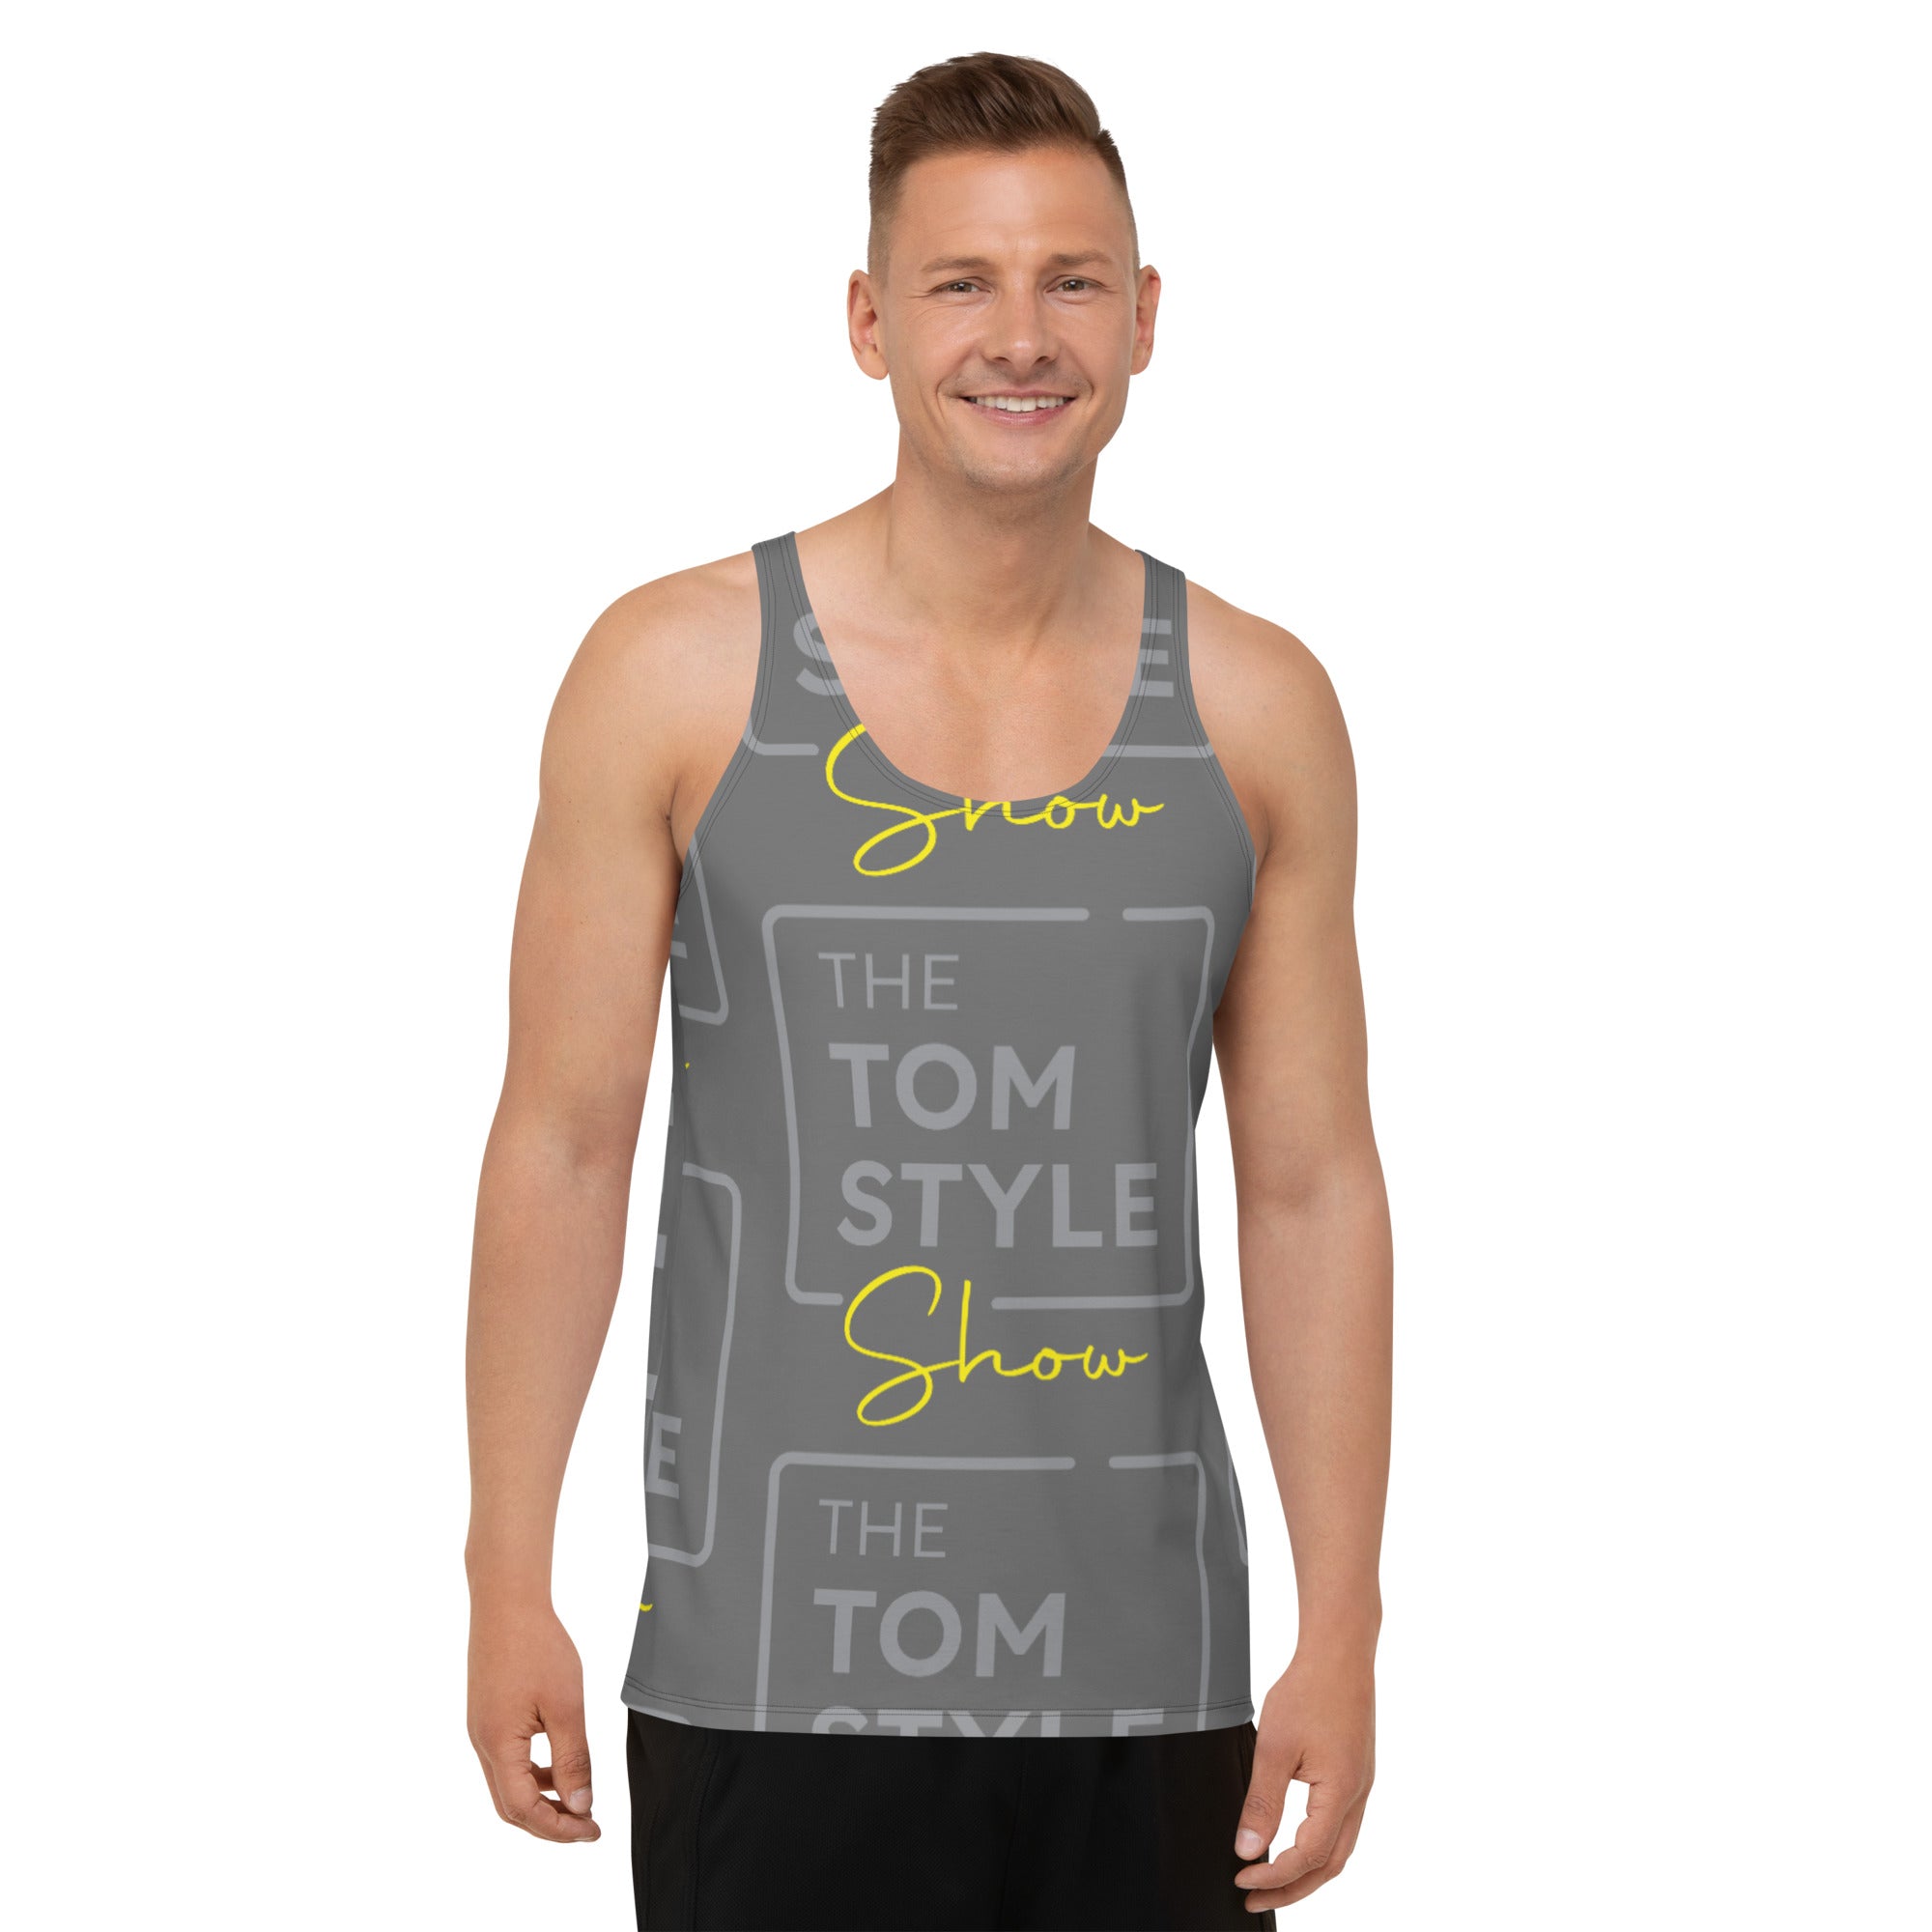 Men's Tank Top - Tom Style Show